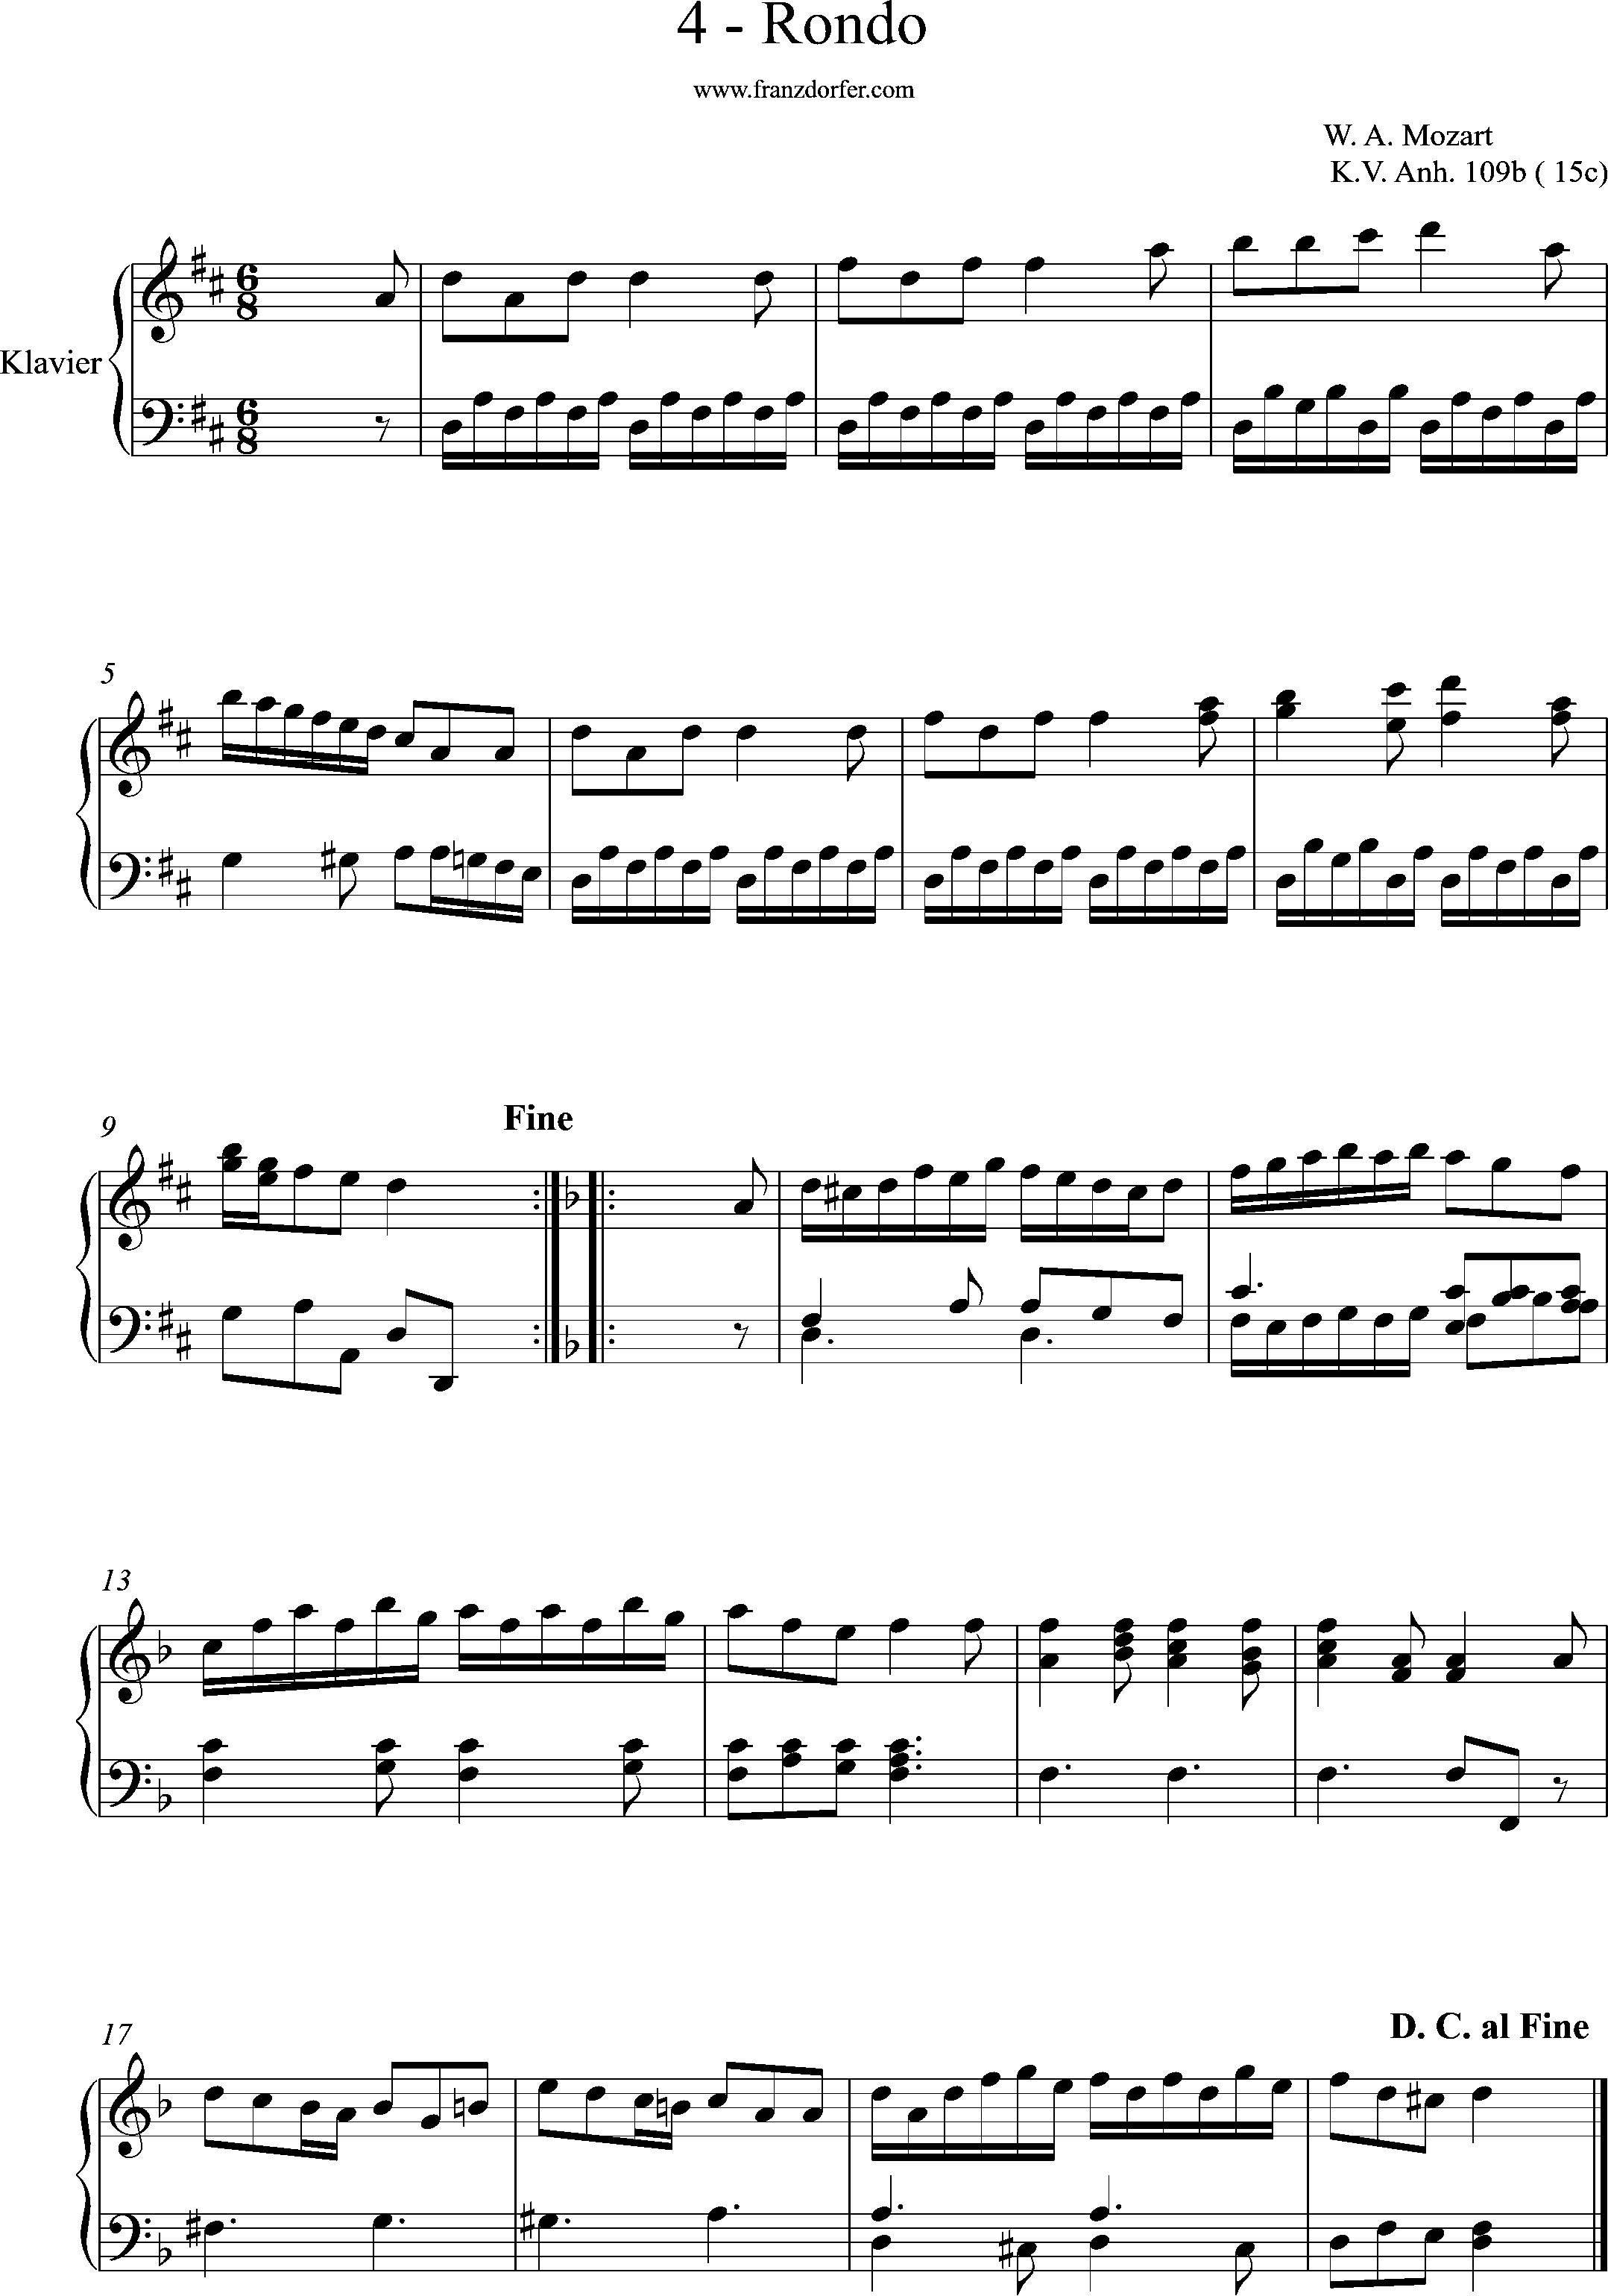 klaviernoten, Rondo, KV 109b, 15d, Mozart